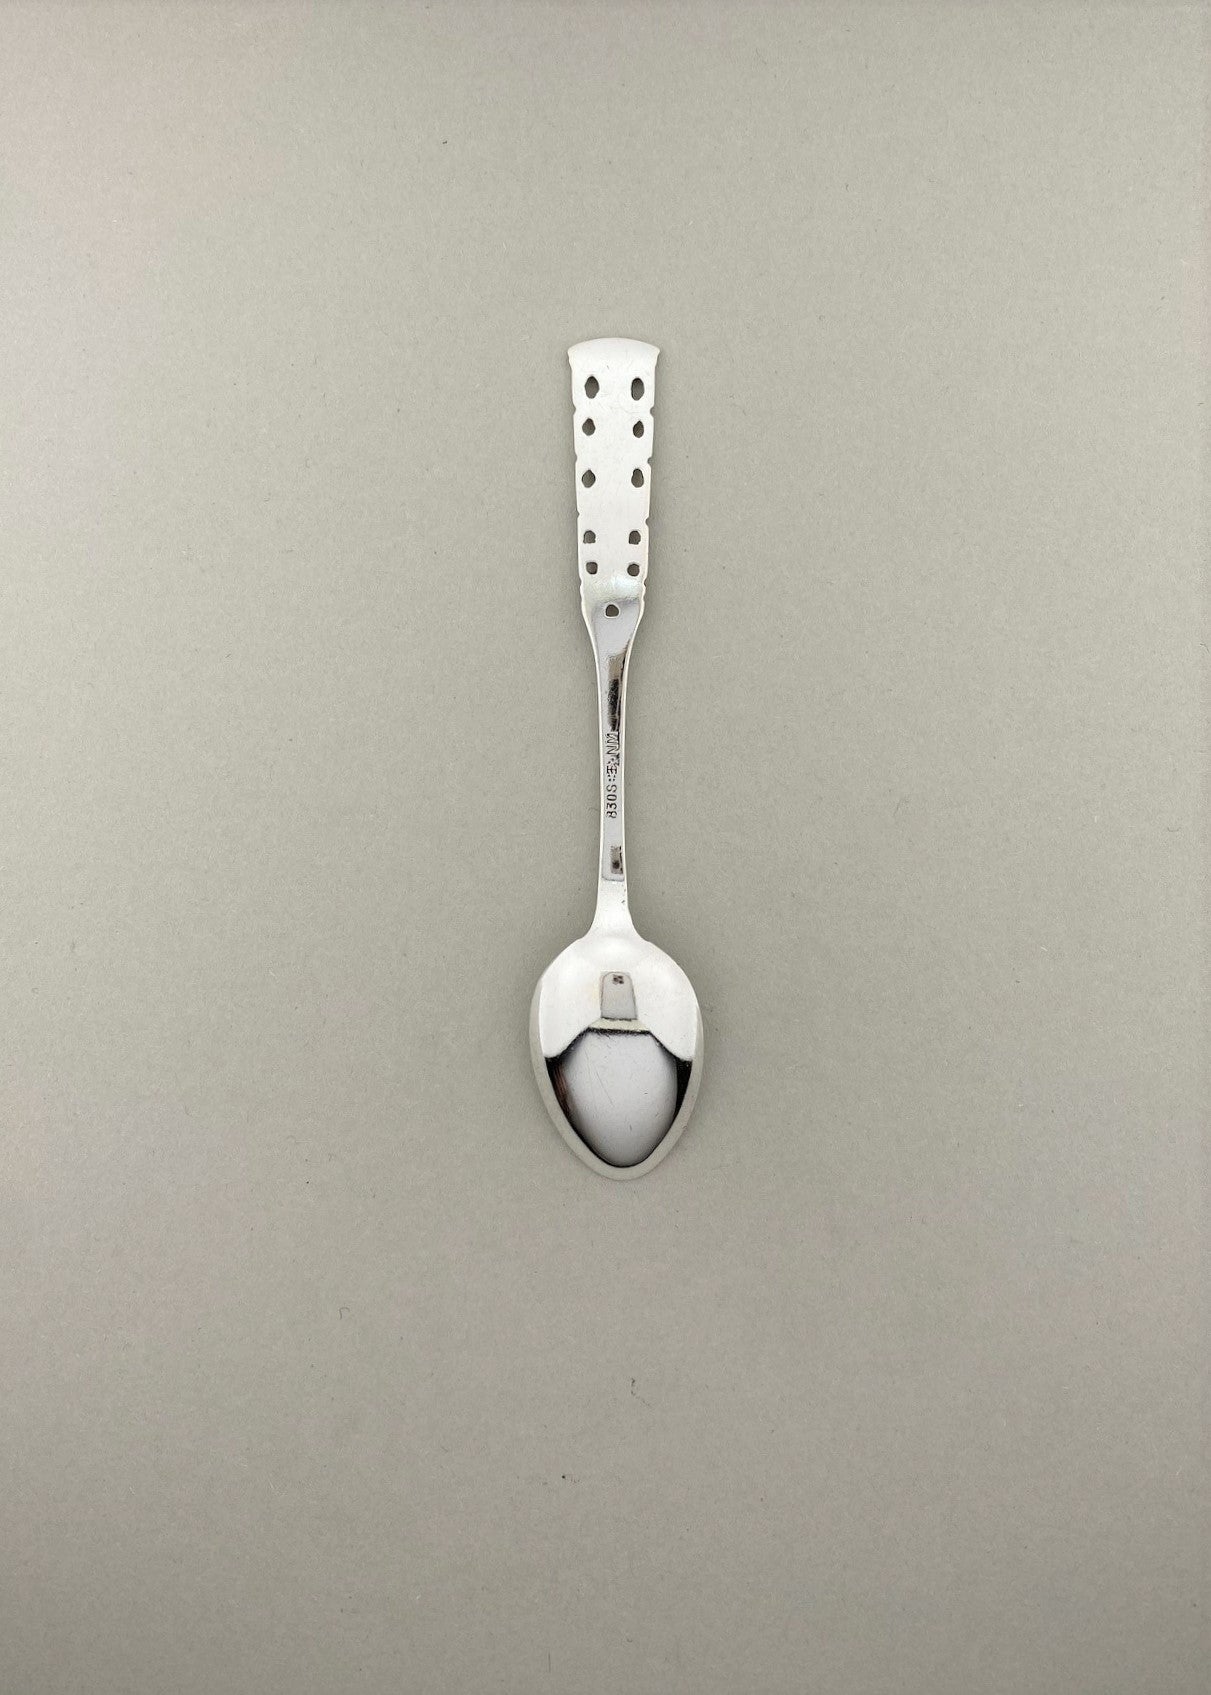 Vintage Snøfrid coffee spoon